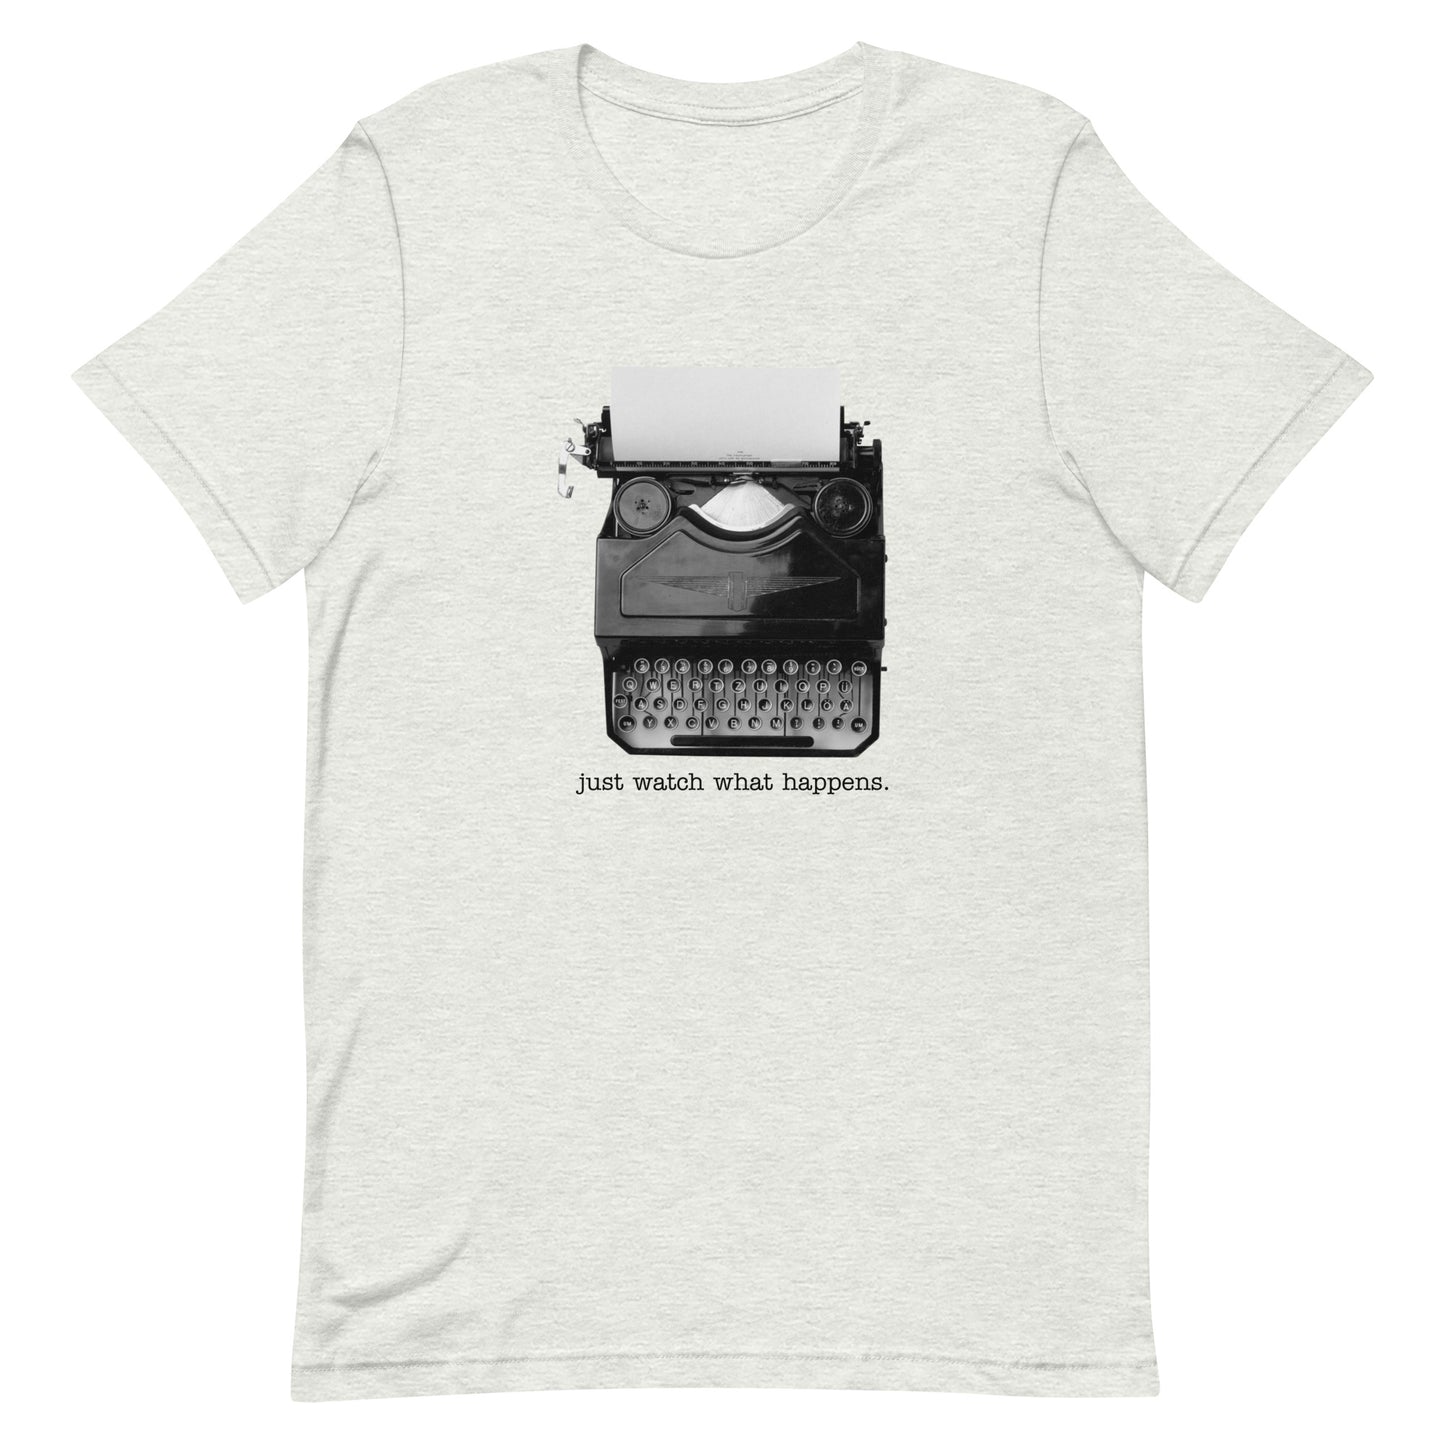 Writing Hard News T-shirt